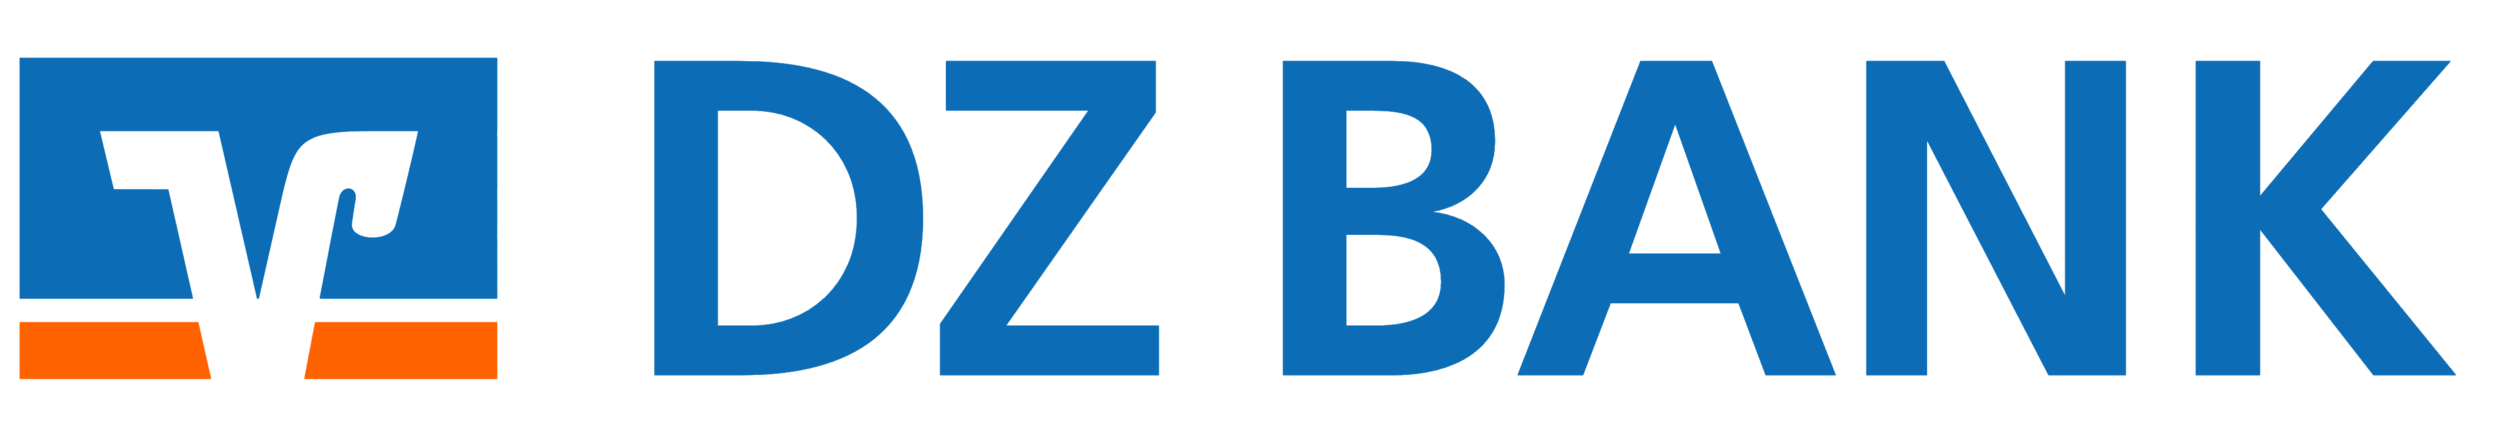 CLIENT - DZ_Bank_logo.png